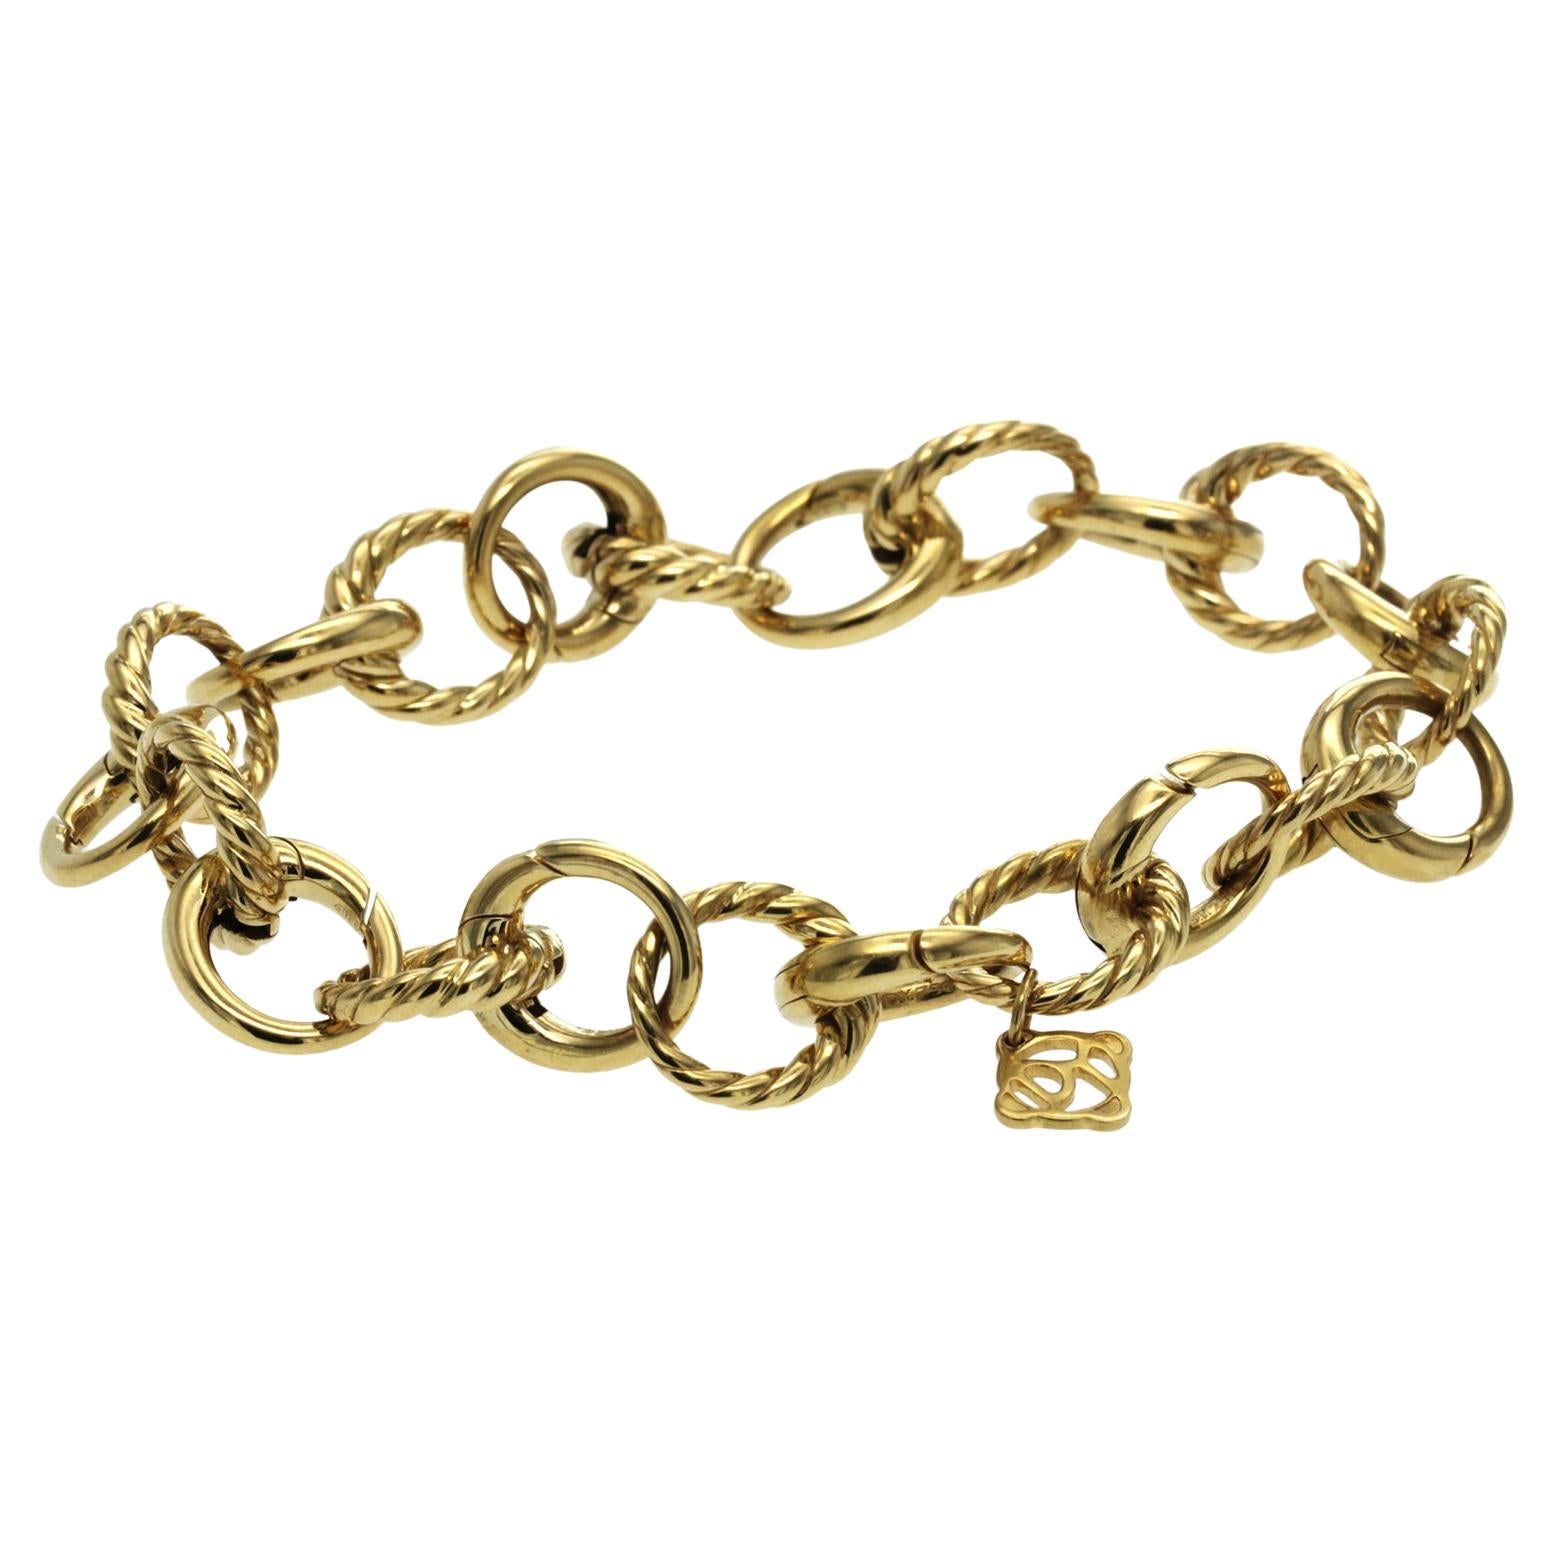 Authentic David Yurman 18K Yellow Gold Cable Link Charm Beads Bracelet